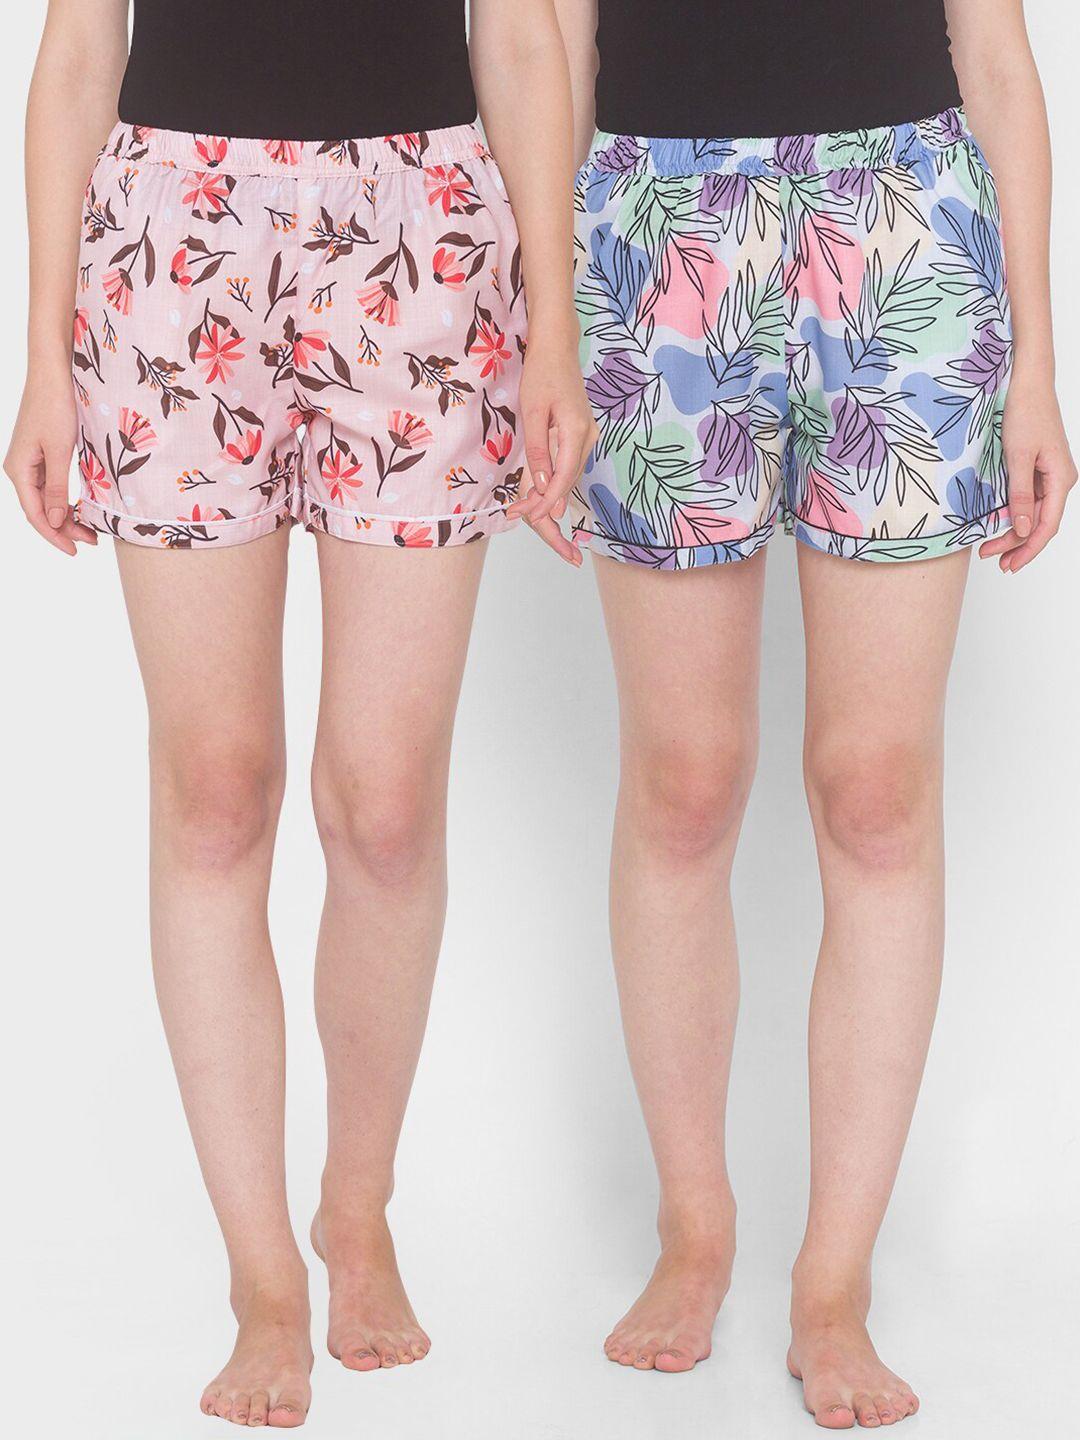 fashionrack women pink & blue pack of 2 printed cotton lounge shorts